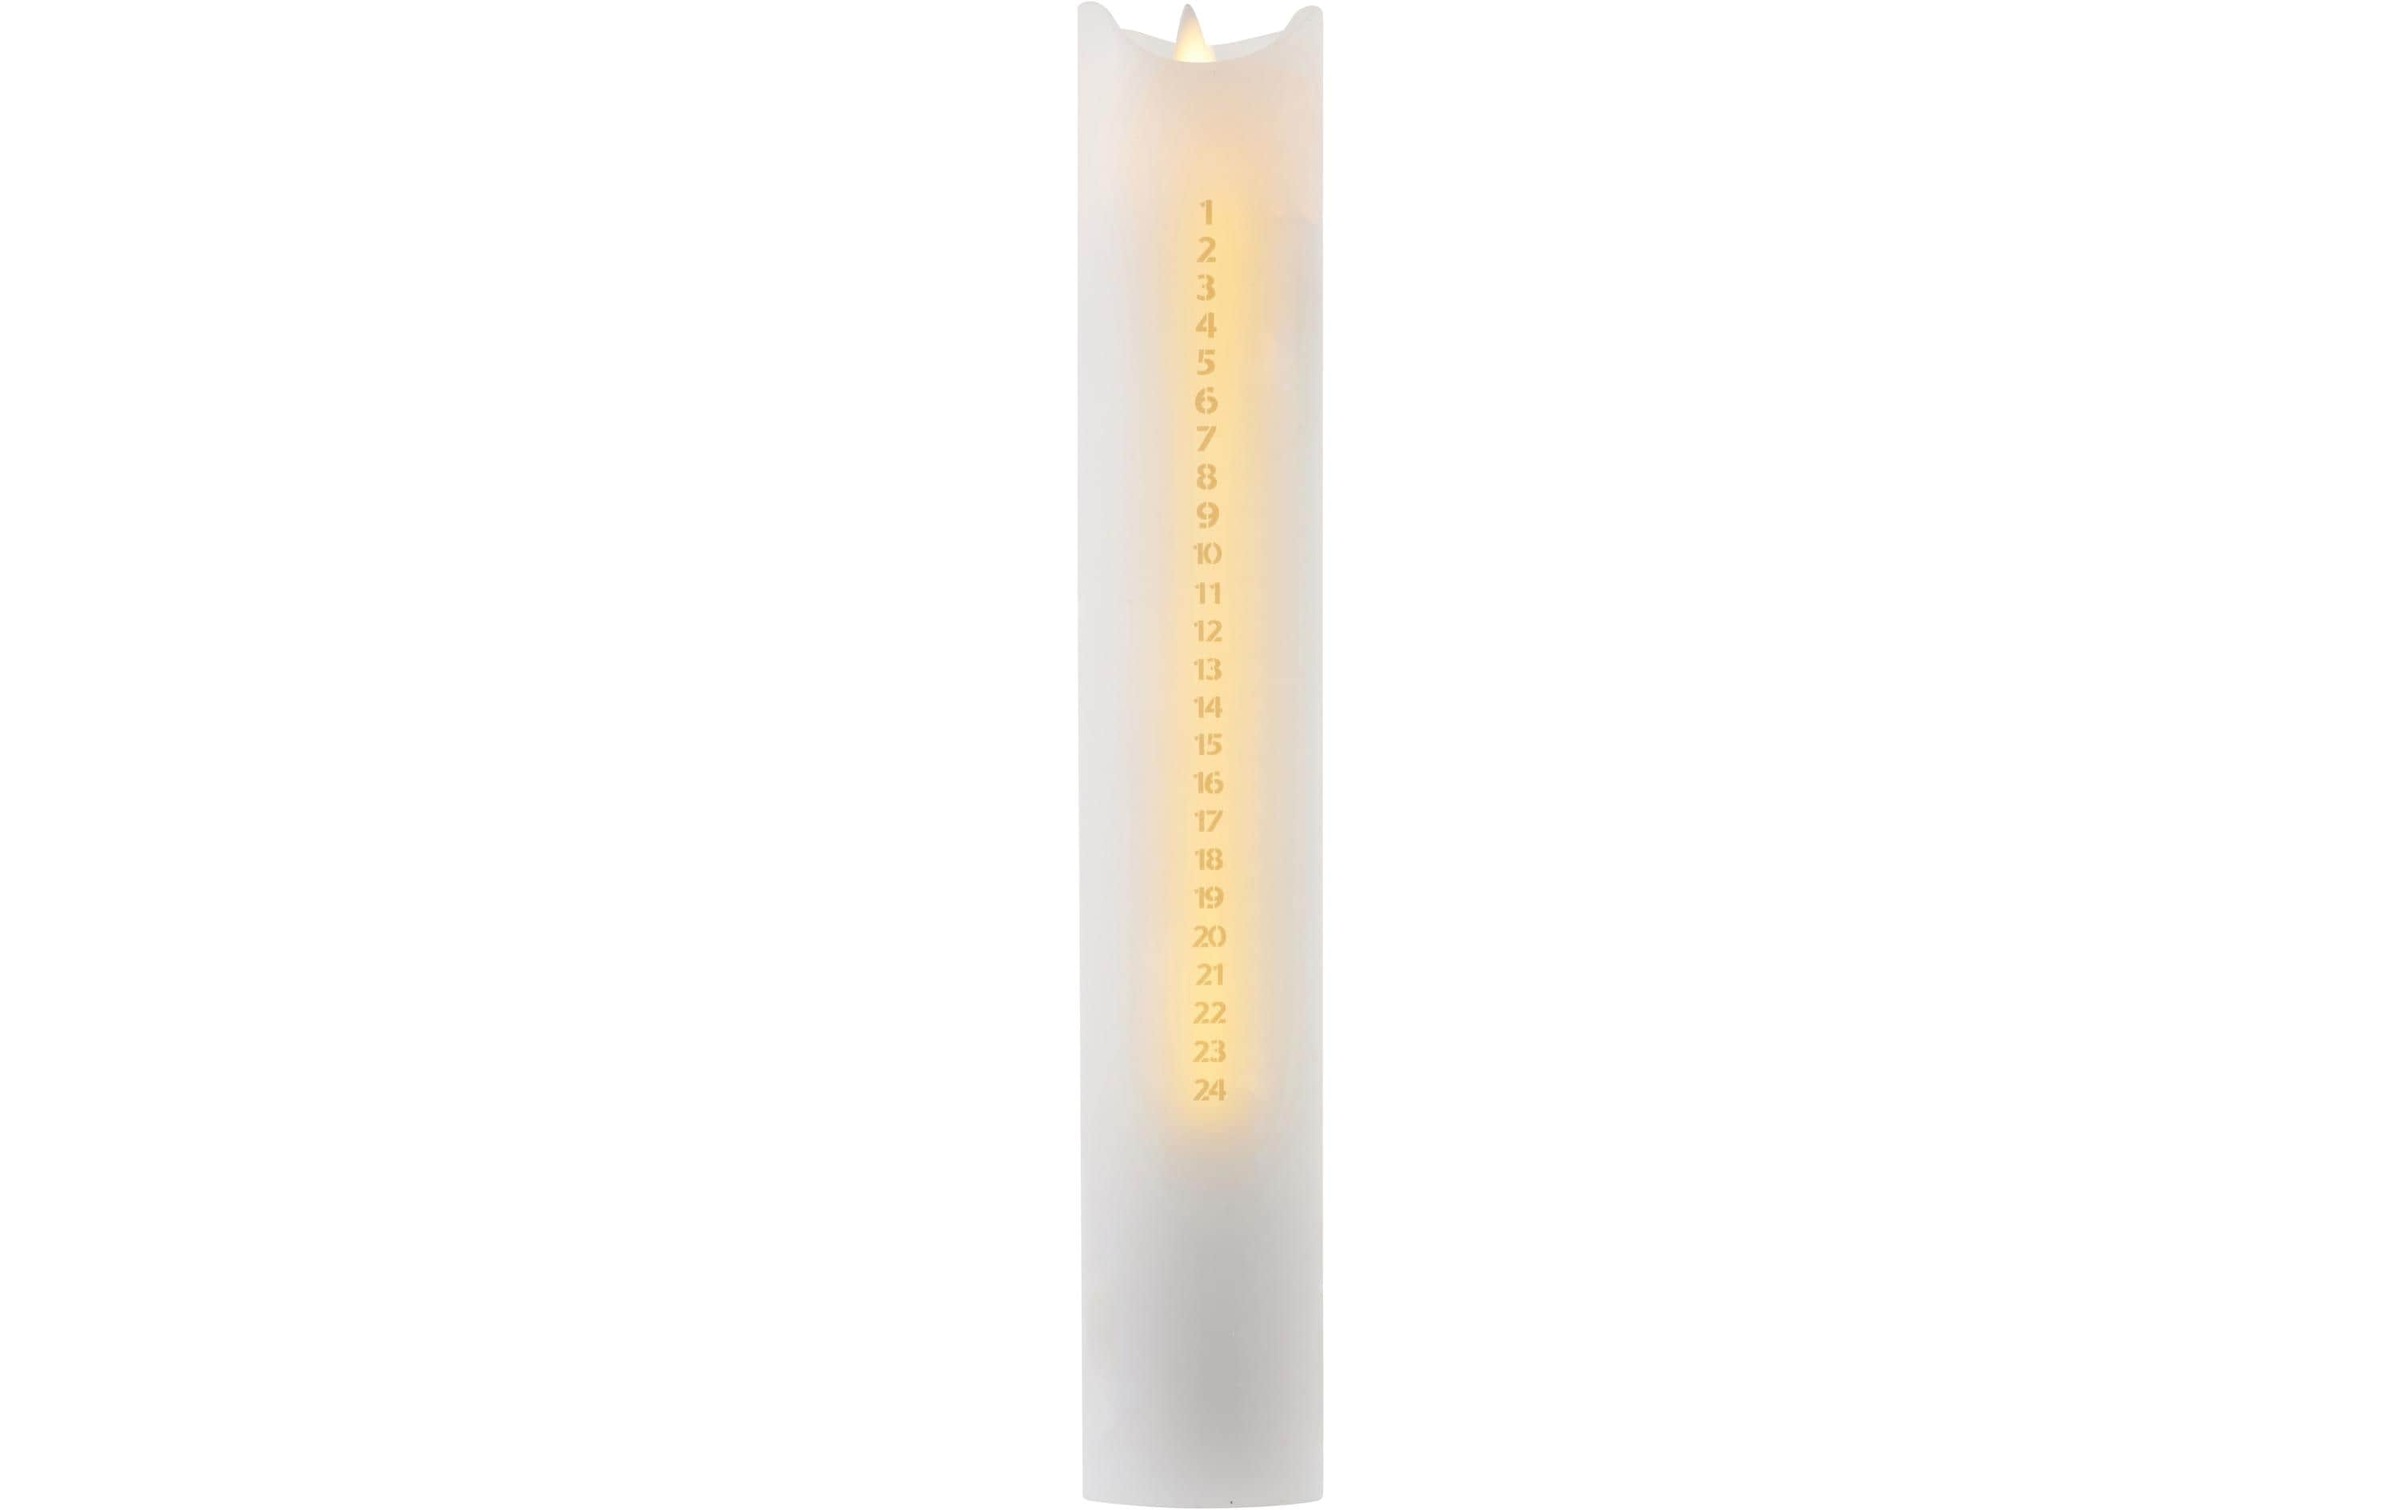 Sirius Adventskerze »LED-Kerzen Advent kaufen Calendar goldfarben« bequem